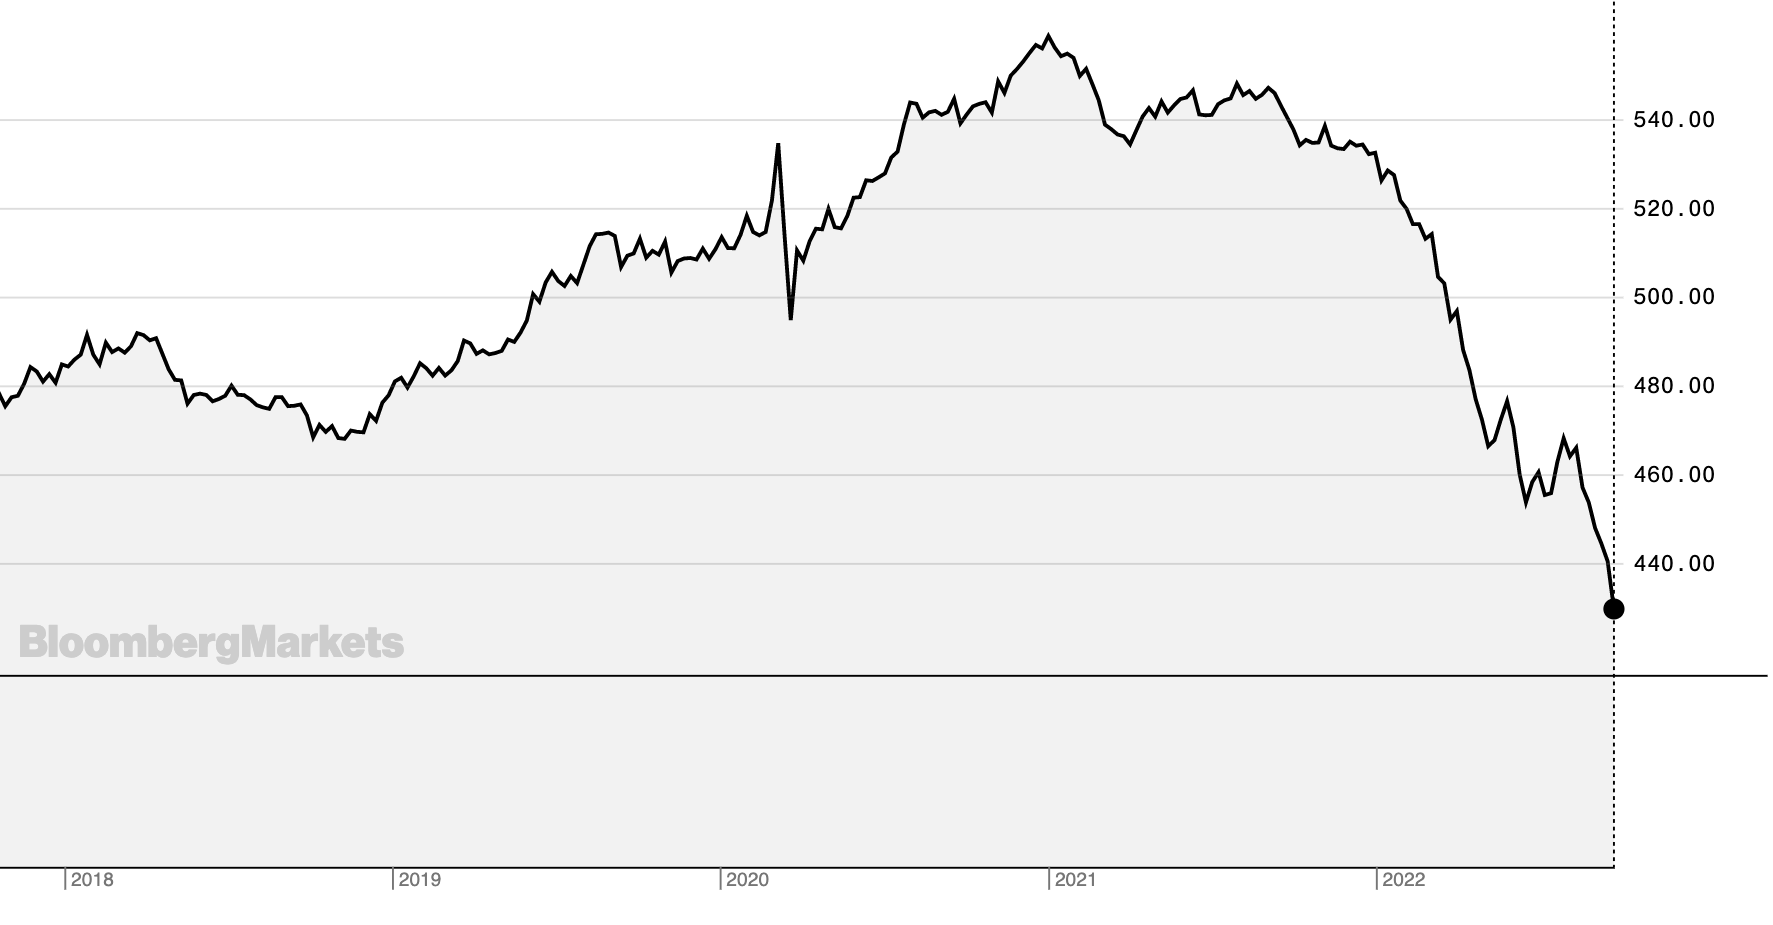 Bloomberg's bond index, Sep 2022